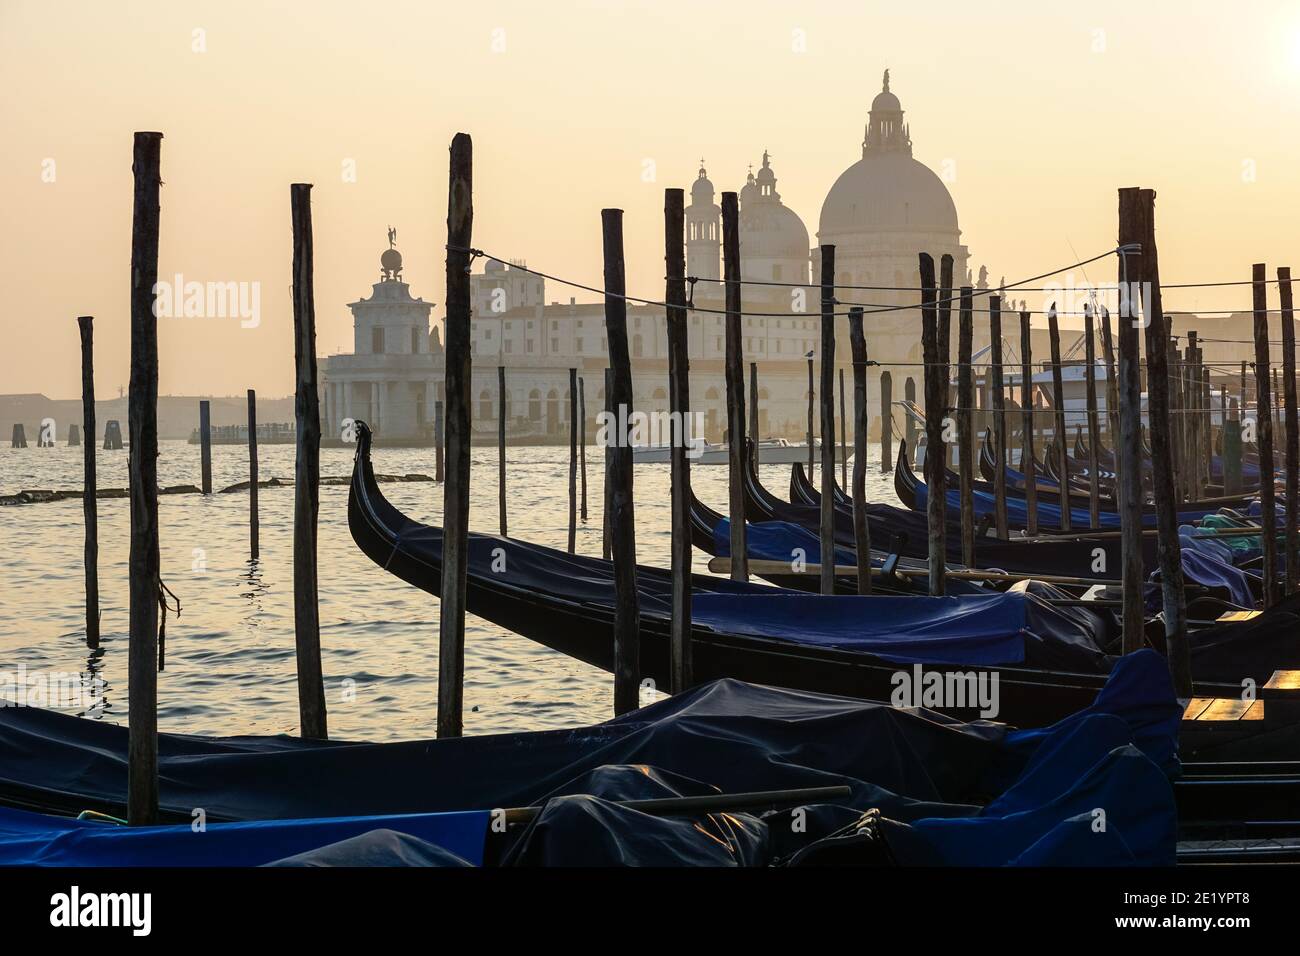 Venetian gondola at sunset, gondolas moored in Venice with Santa Maria della Salute basilica in the background, Italy Stock Photo